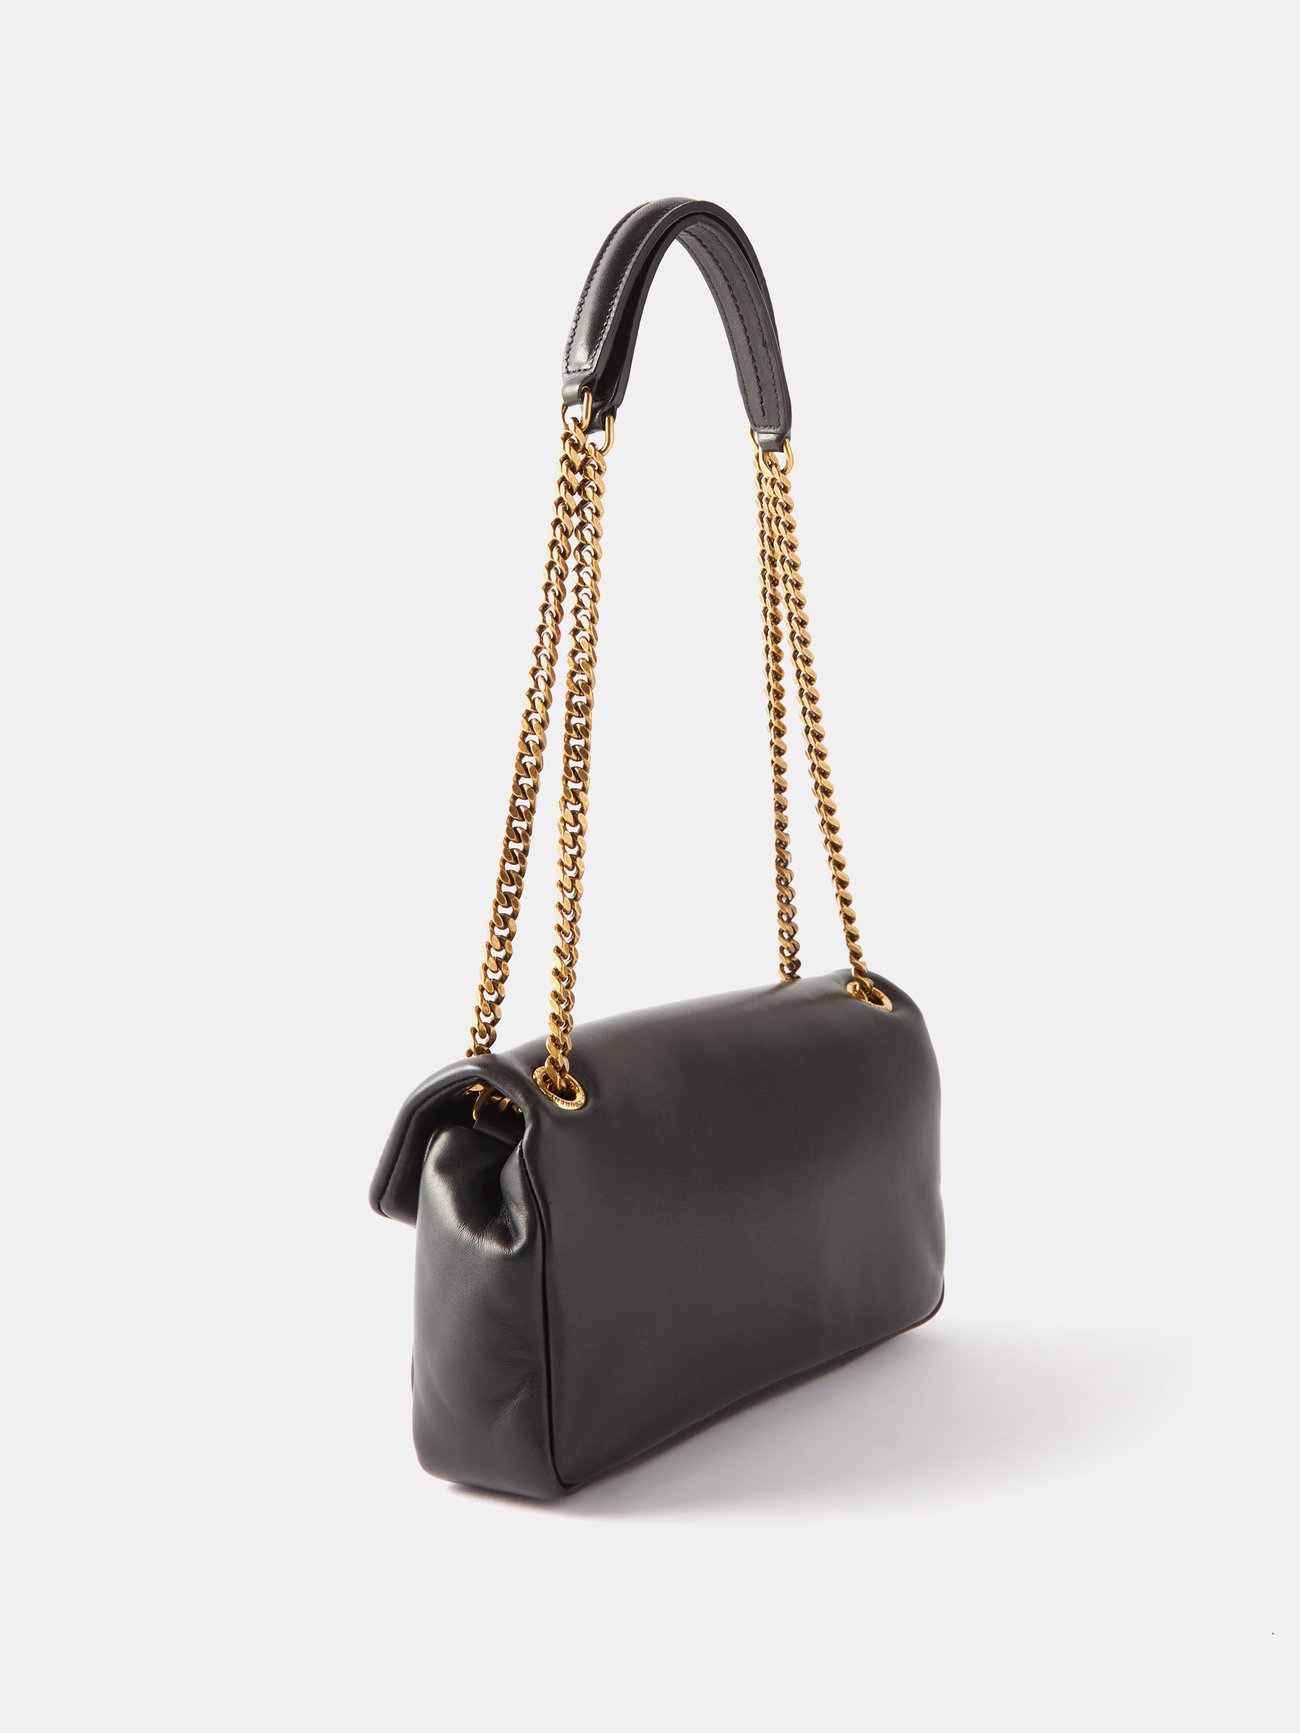 Saint Laurent Calypso Ysl Leather Chain Shoulder Bag